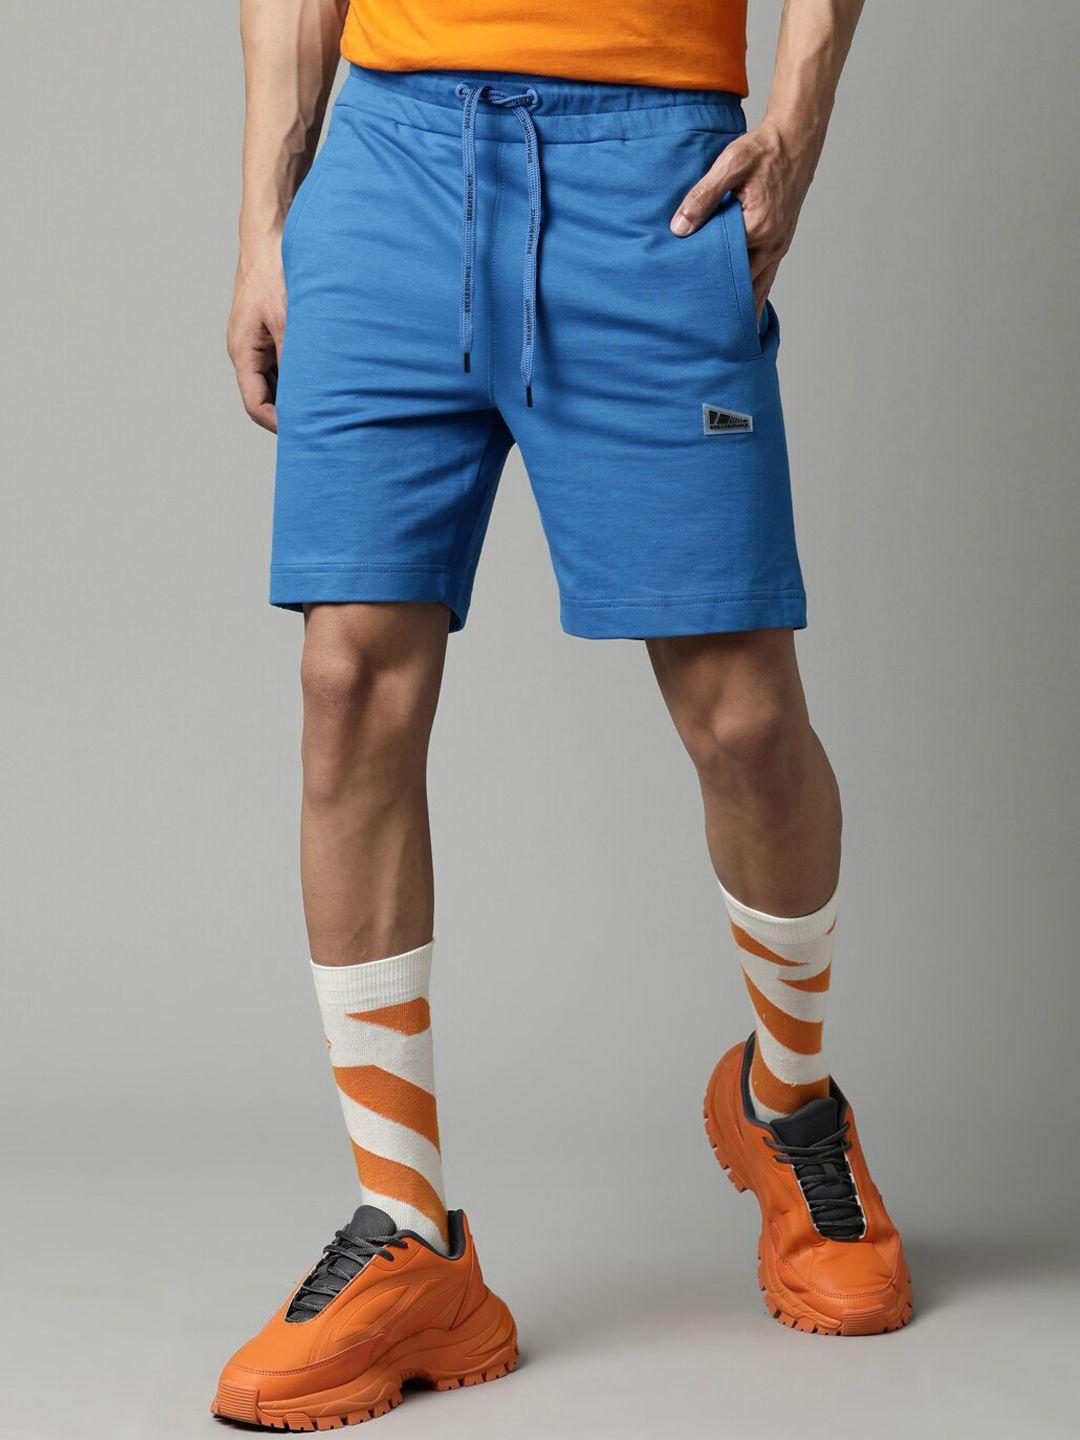 breakbounce-men-blue-cotton-shorts